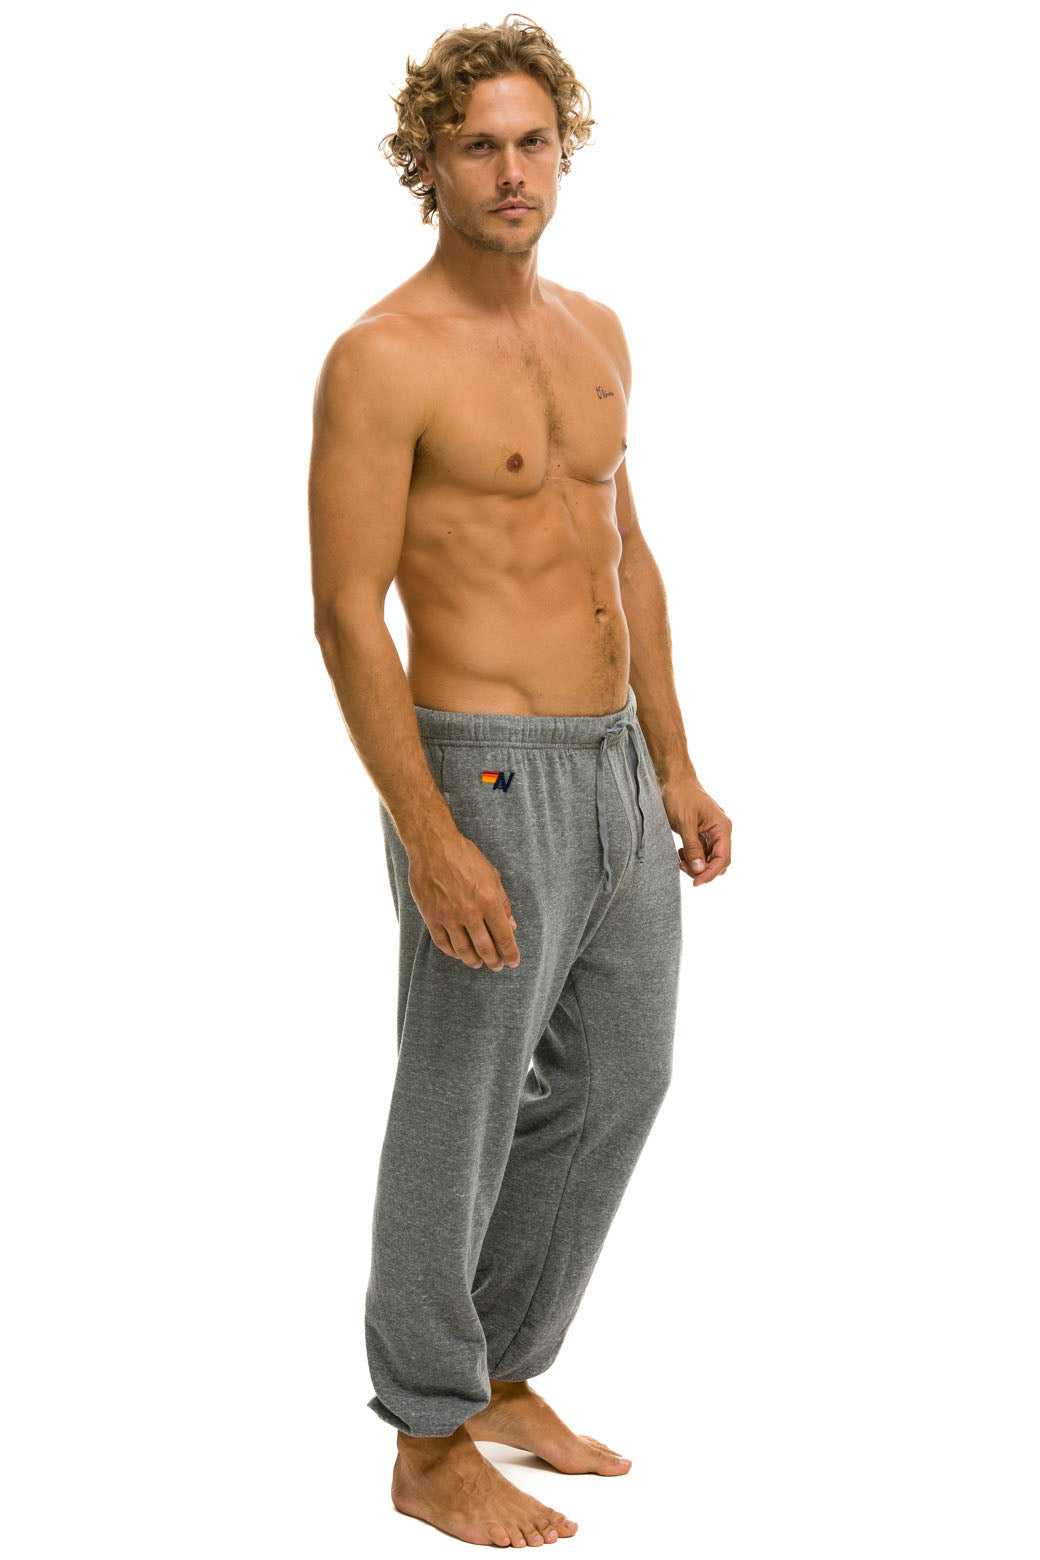 Plus Size Men's Letter b & Star Print Sweatpants Oversized